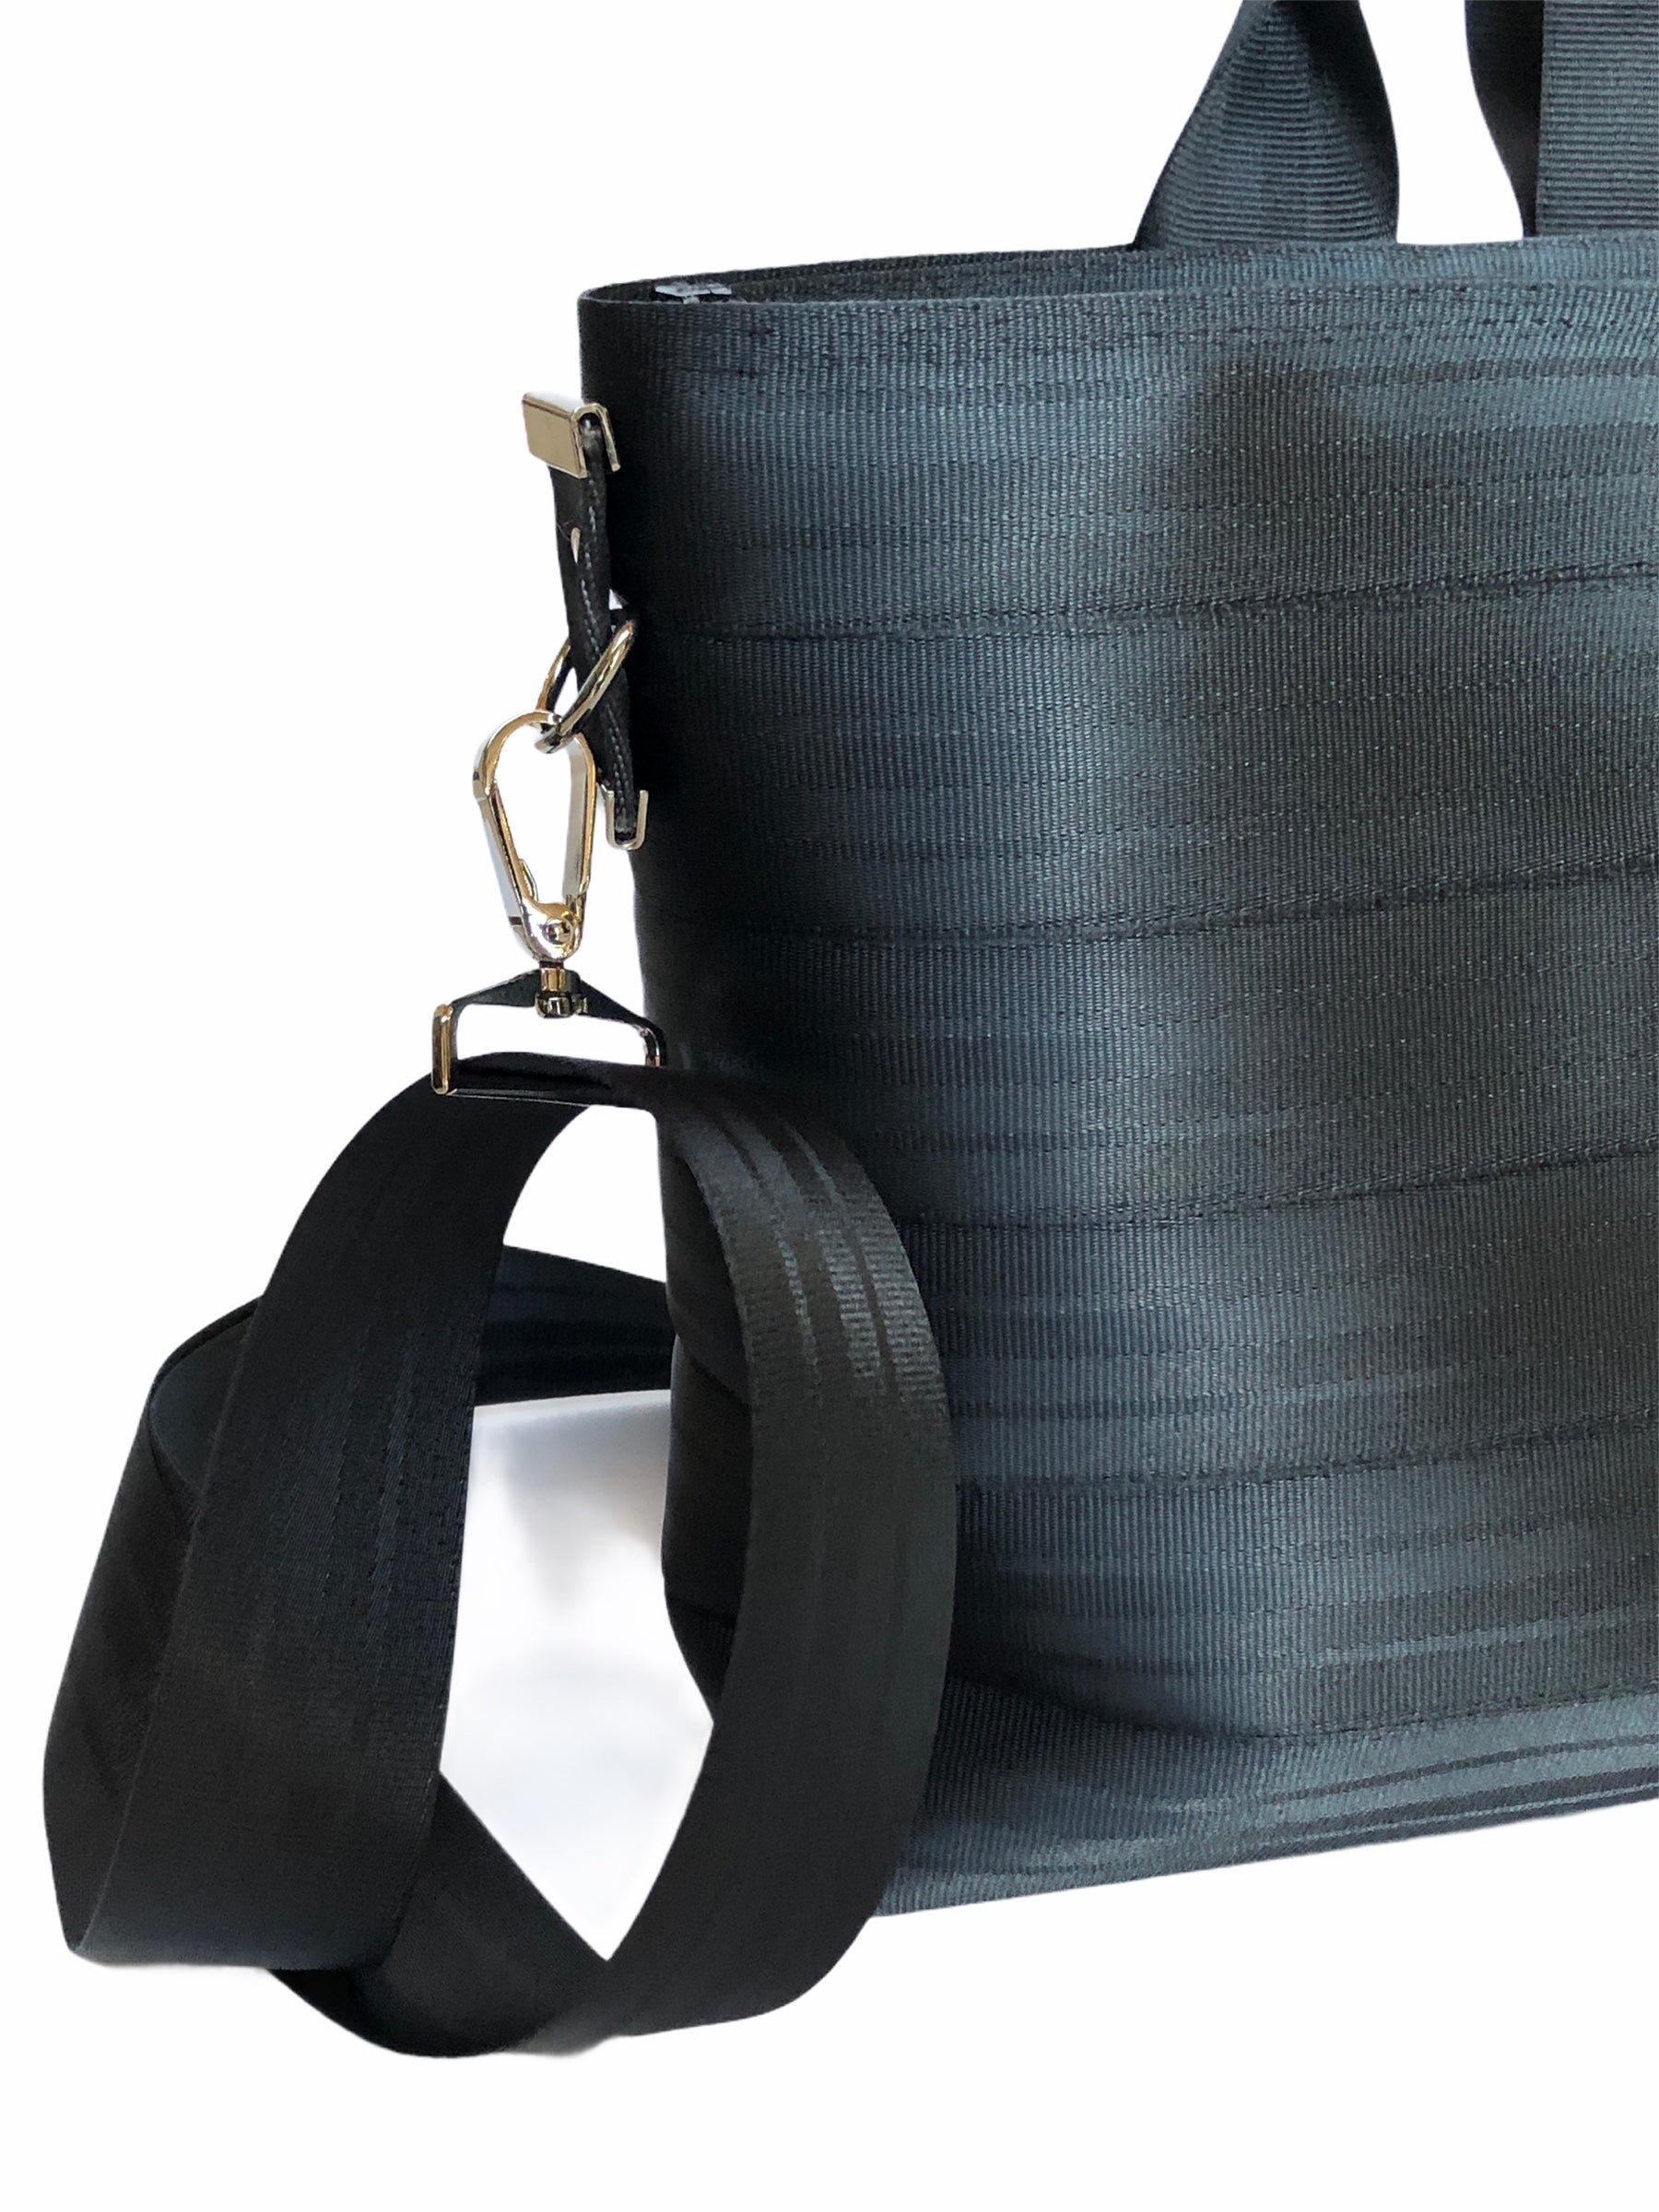 Pure Detroit OFFICIAL -  Convertible Tote Seatbelt Bag - Black PRE ORDER Seatbelt Bags   